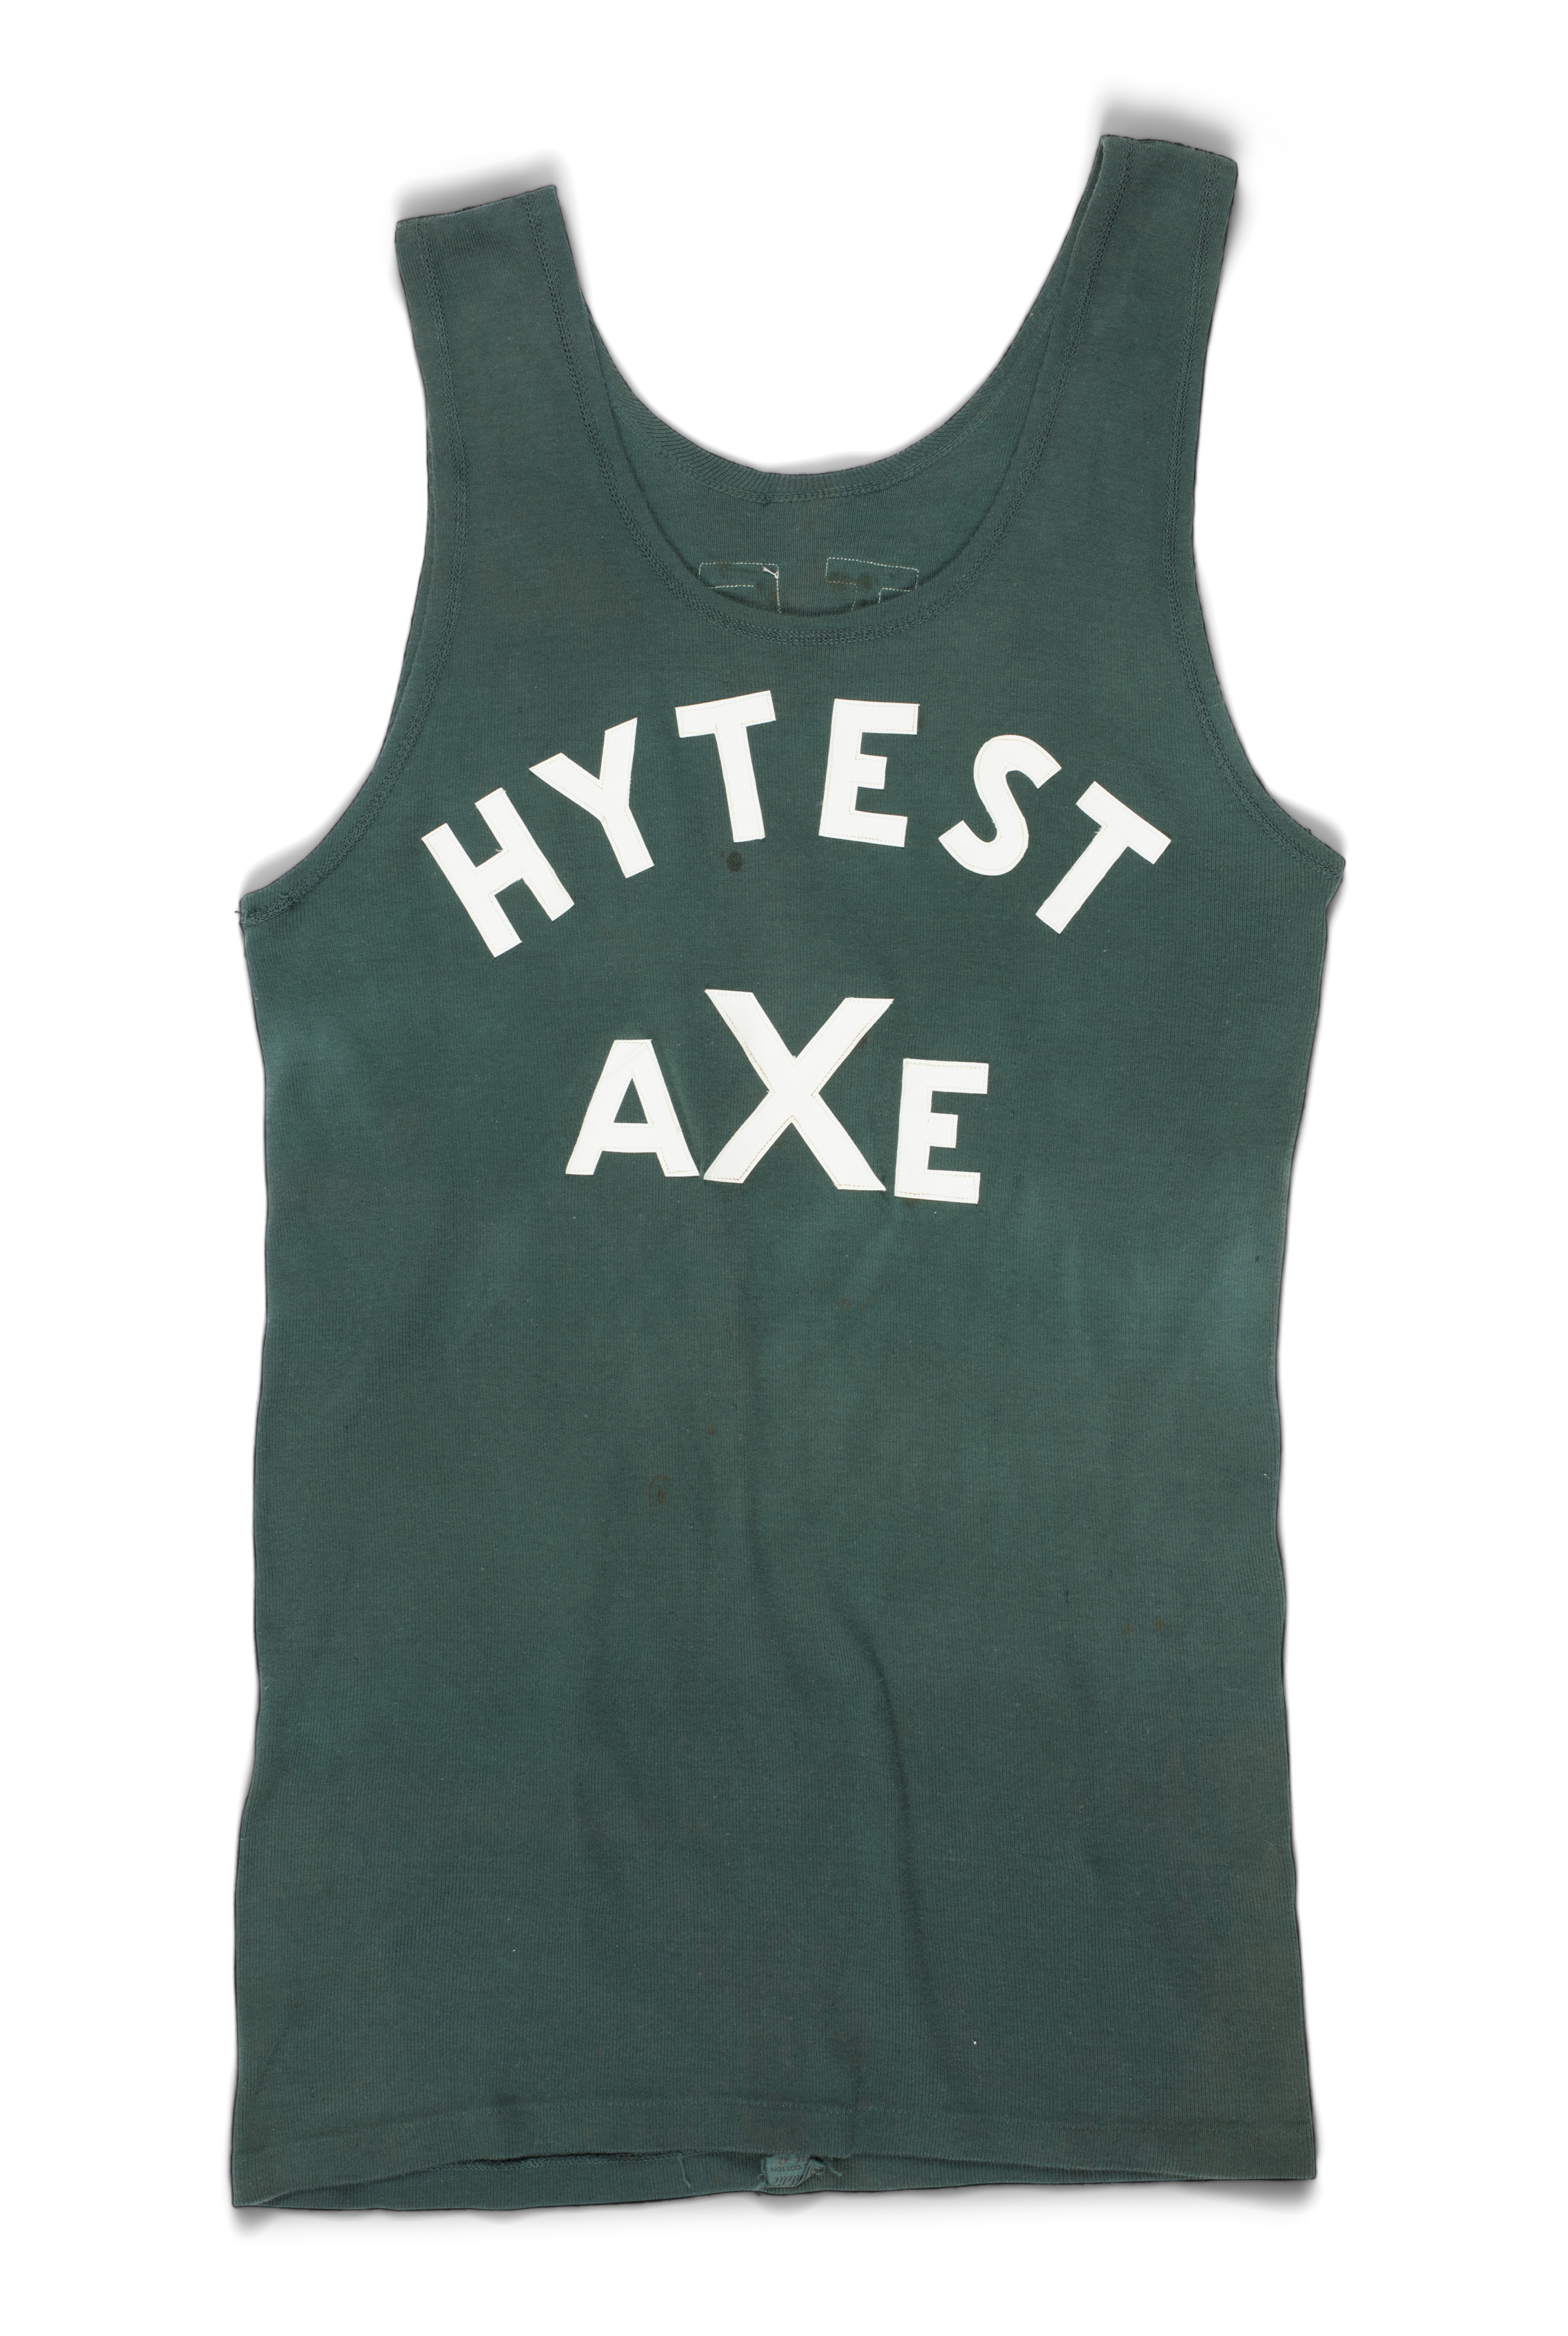 'HYTEST AXE' singlet worn by champion axeman Tom Kirk